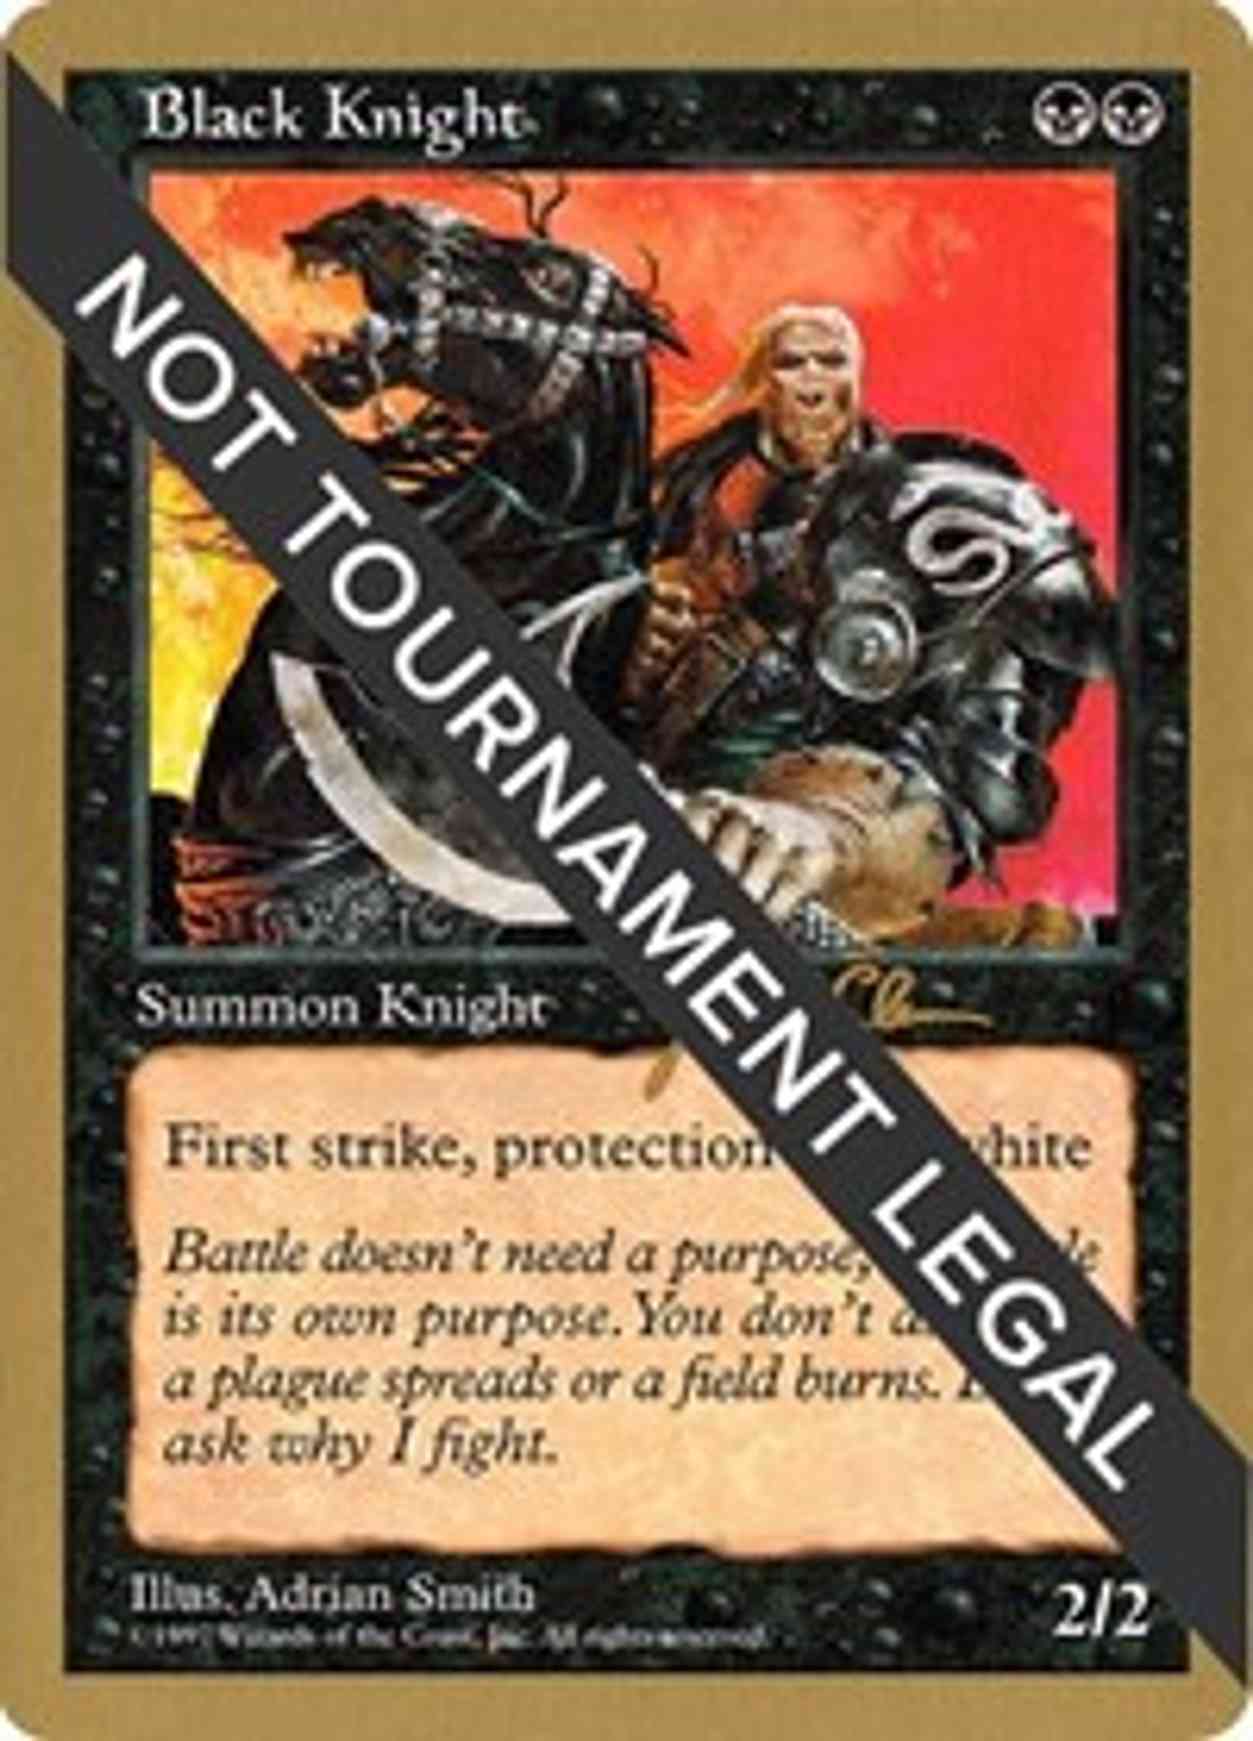 Black Knight - 1997 Jakub Slemr (5ED) magic card front